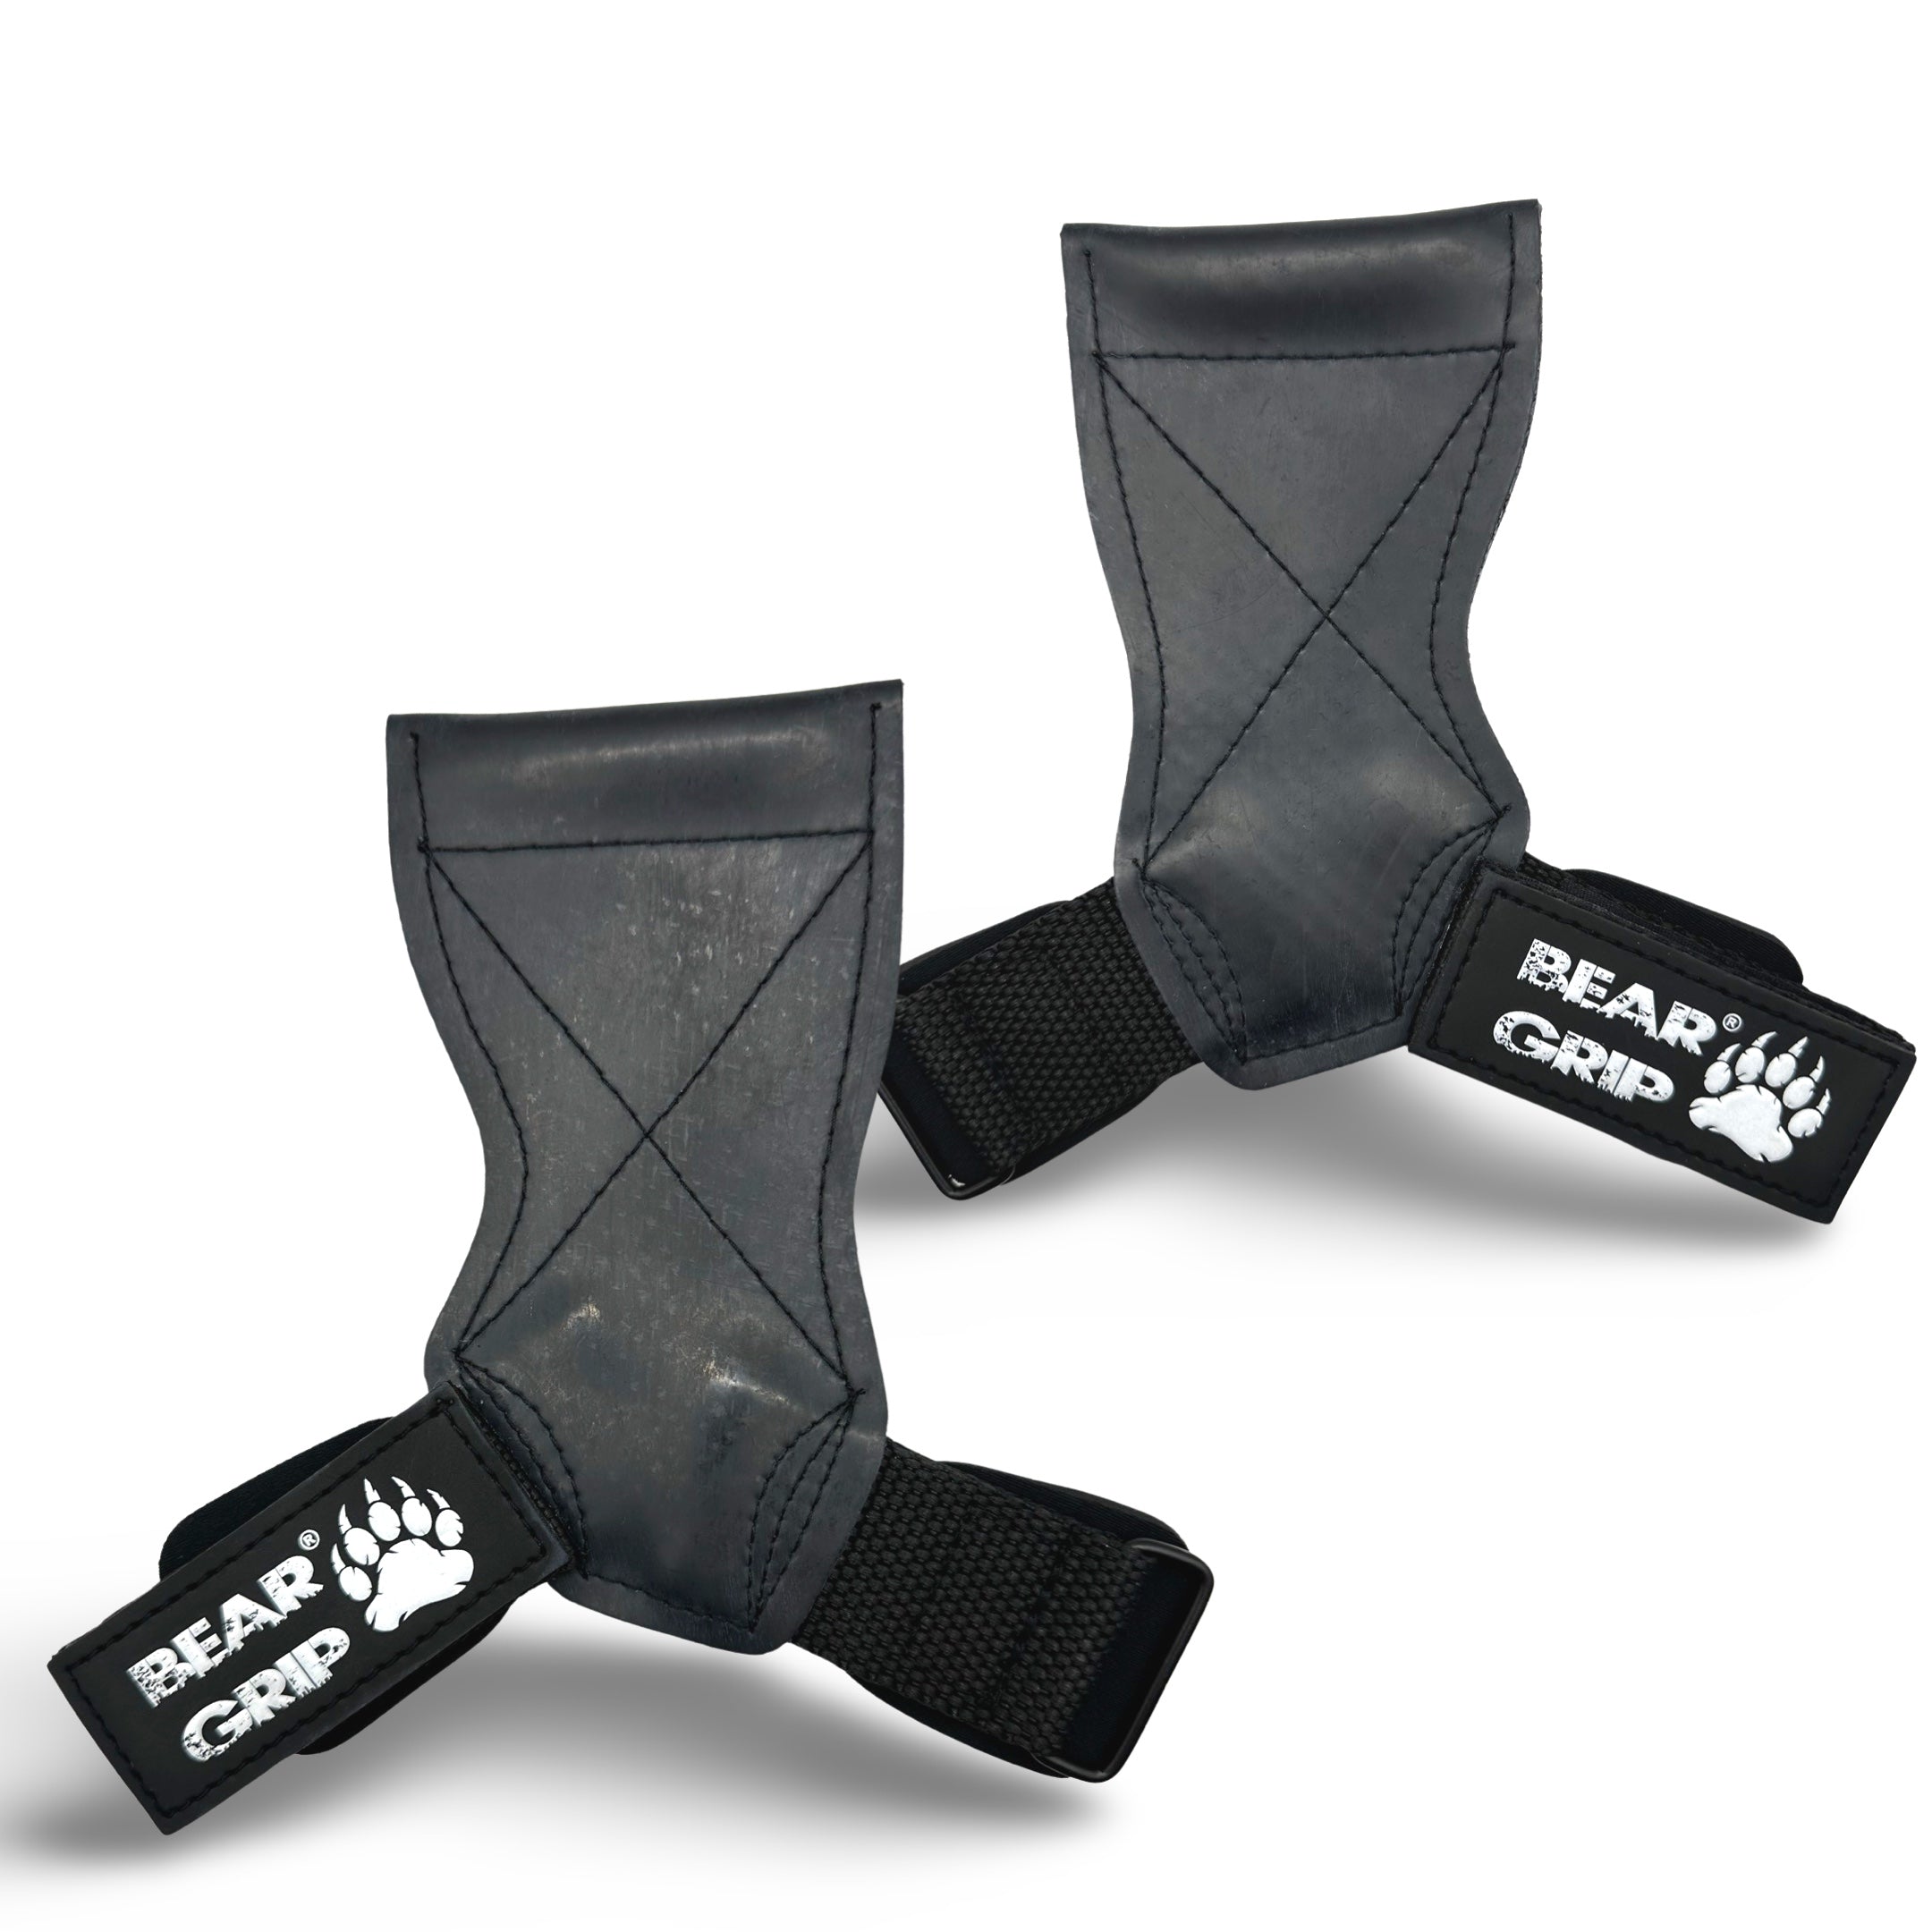 BEAR GRIP® Multi Grip Straps/Hooks, Premium Heavy Duty Weight Lifting Straps/Gloves